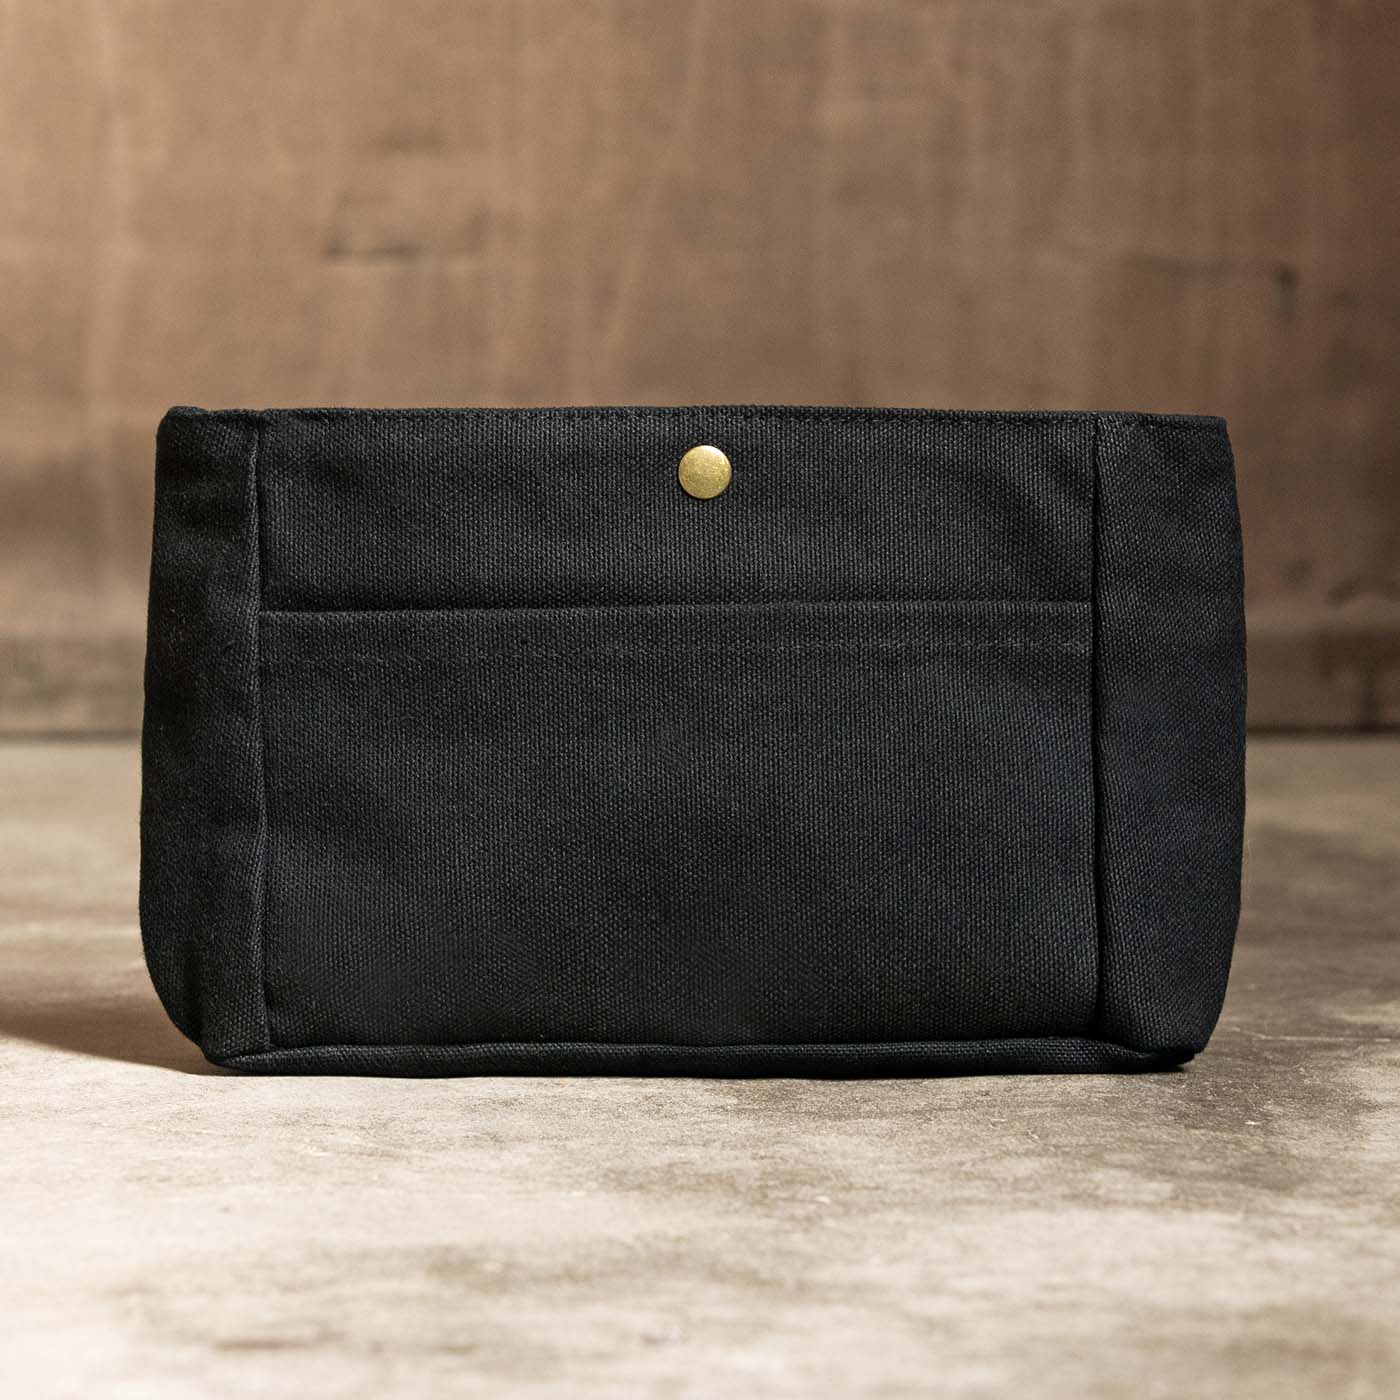 Purse Organizer - Handbag Insert For Easy Bag Switching - Grey